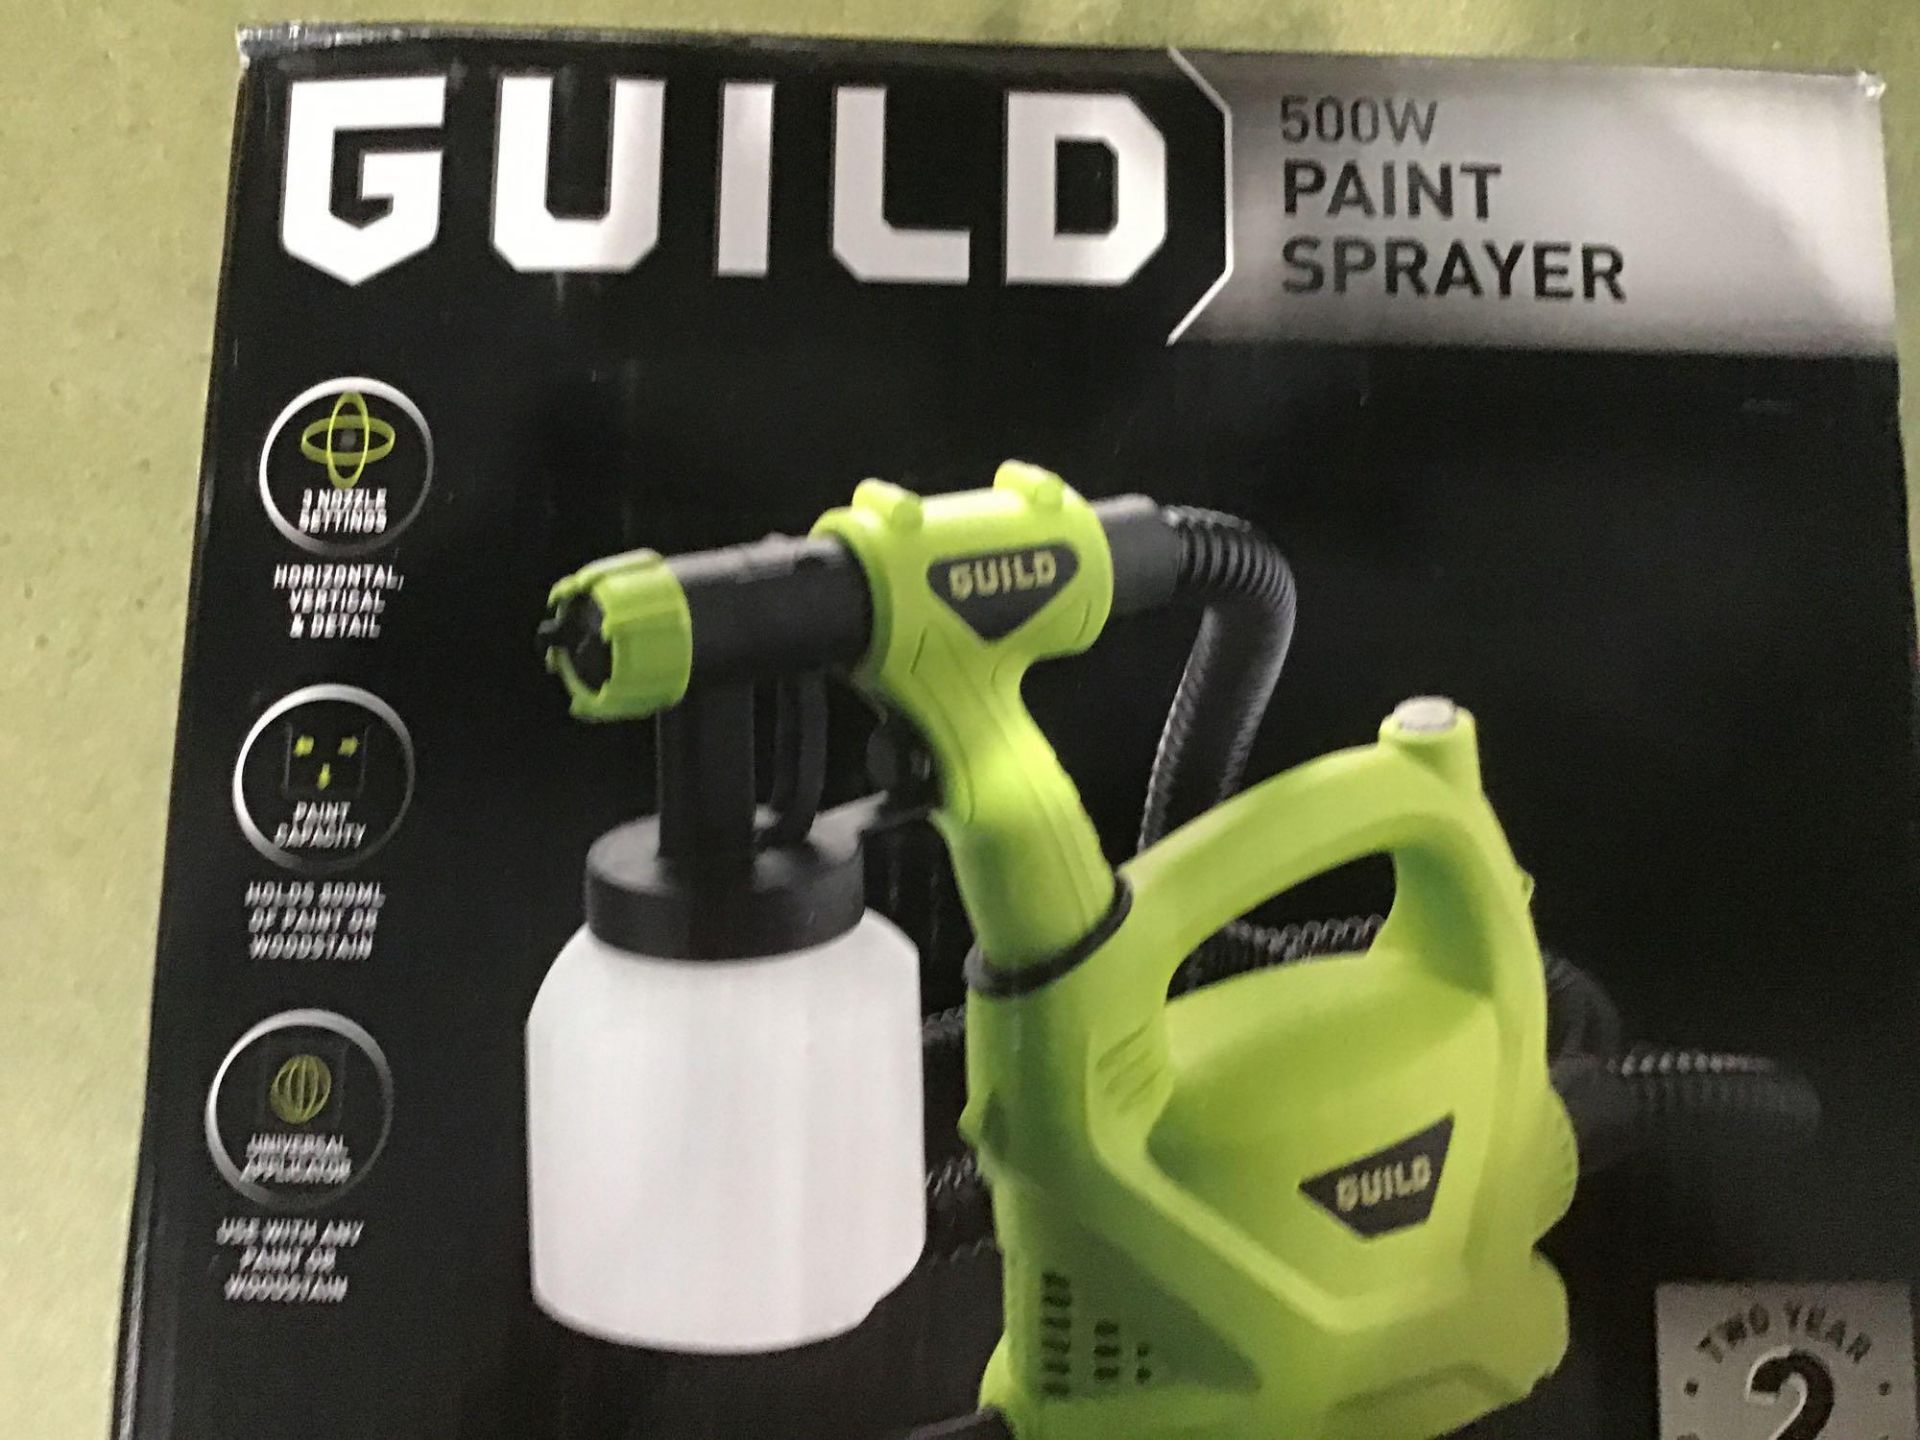 Guild Paint Spray Gun - 500W - £45.00 RRP - Image 2 of 3